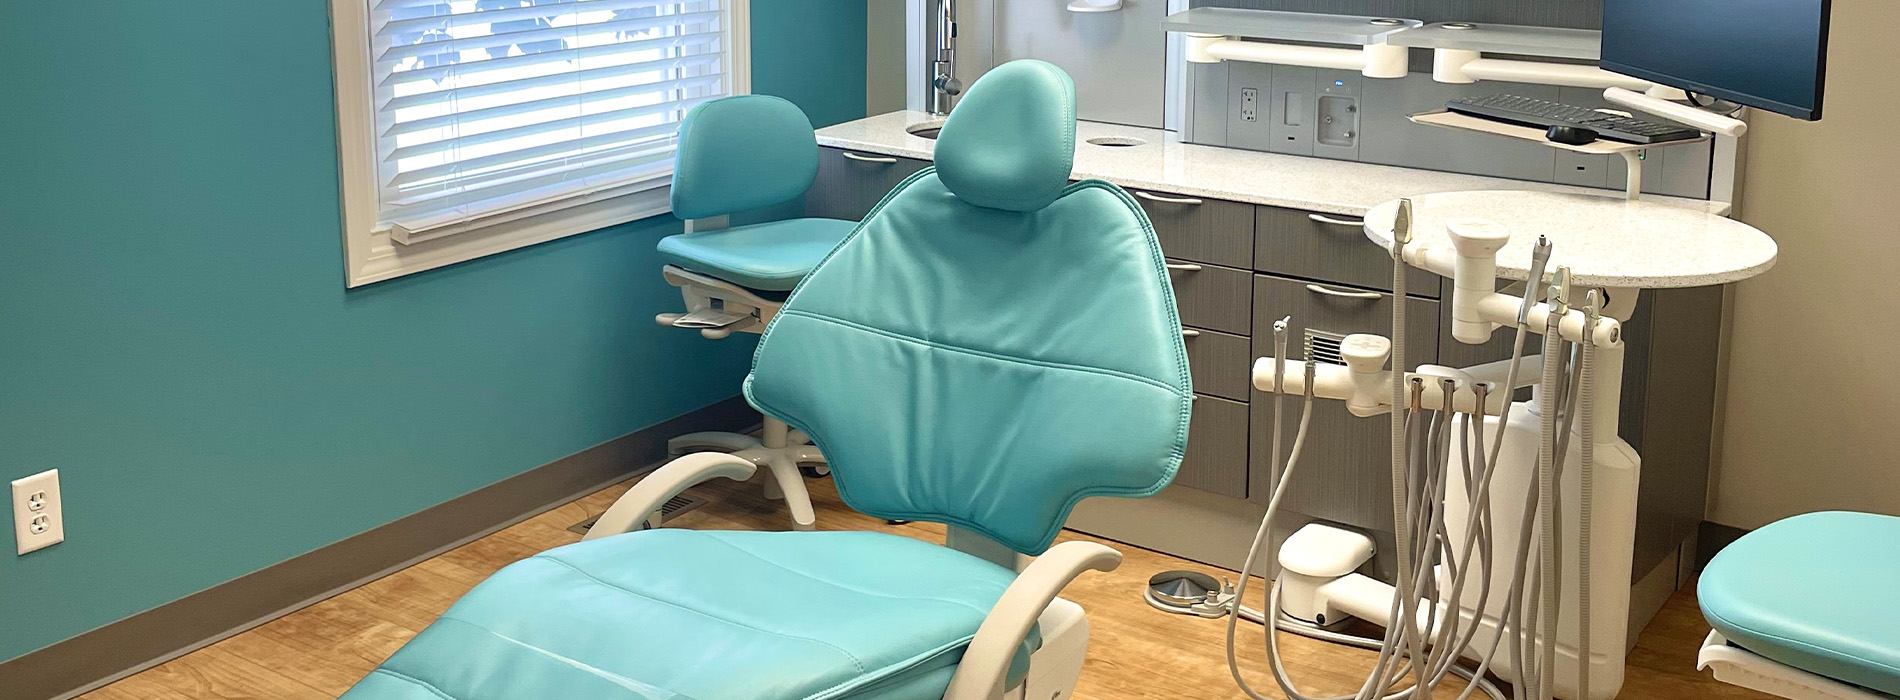 Rifai Dental Group | Pediatric Dentistry, Preventative Program and Digital Radiography